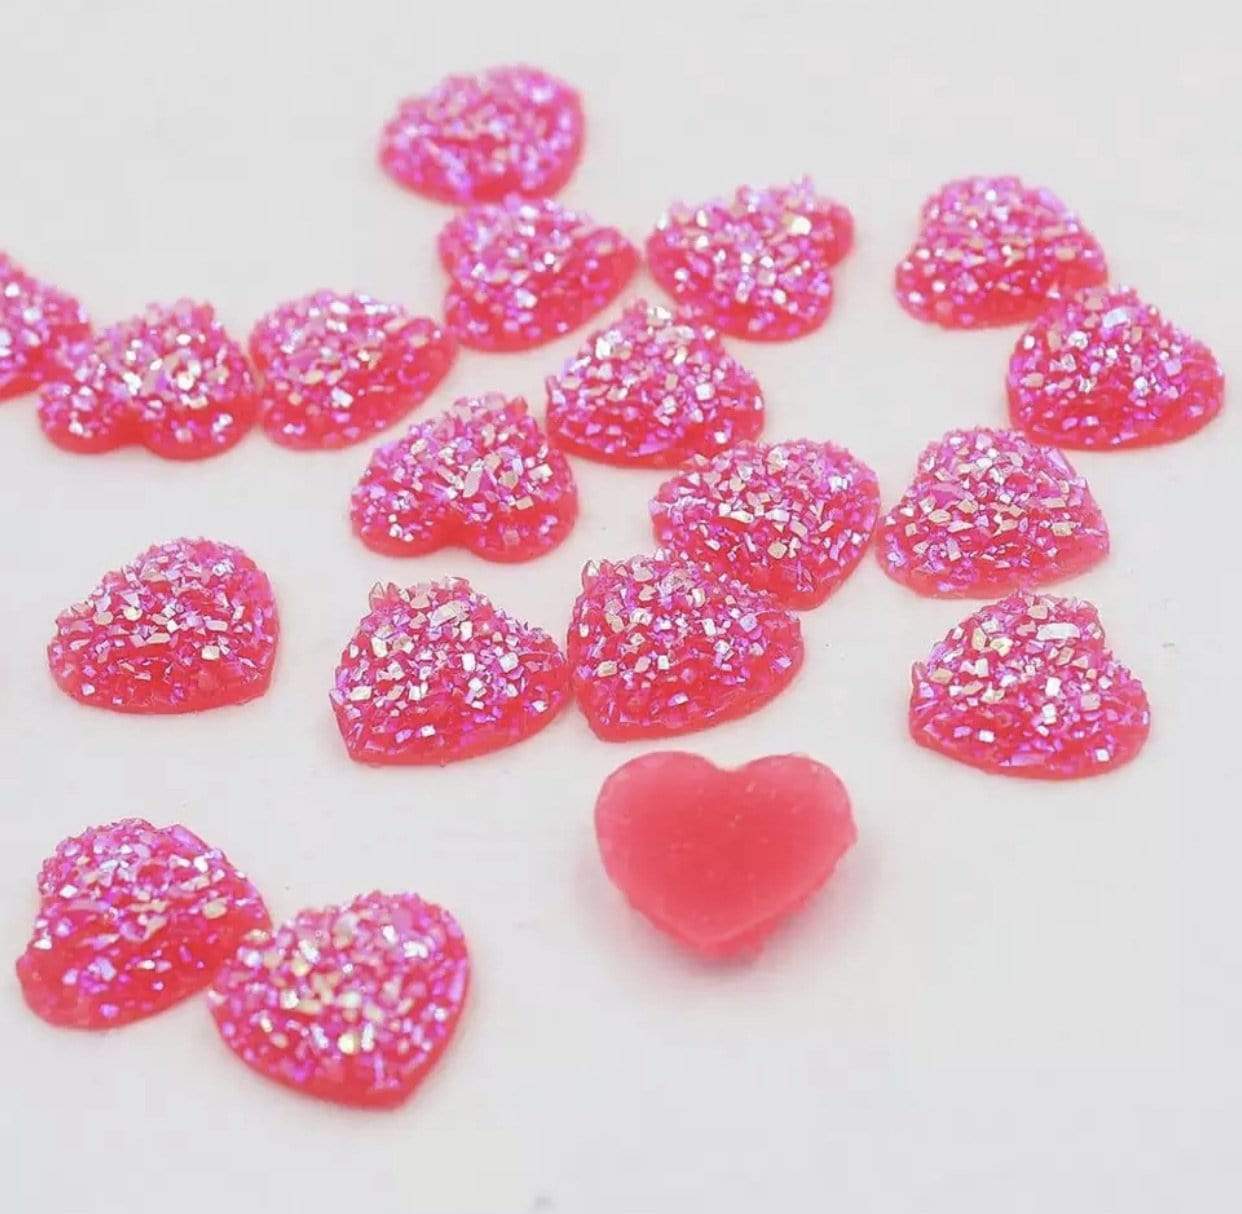 Sundaylace Creations & Bling Resin Gems Hot Pink AB Druzy 12mm AB Heart Druzy Texture Glue on Resin Gem